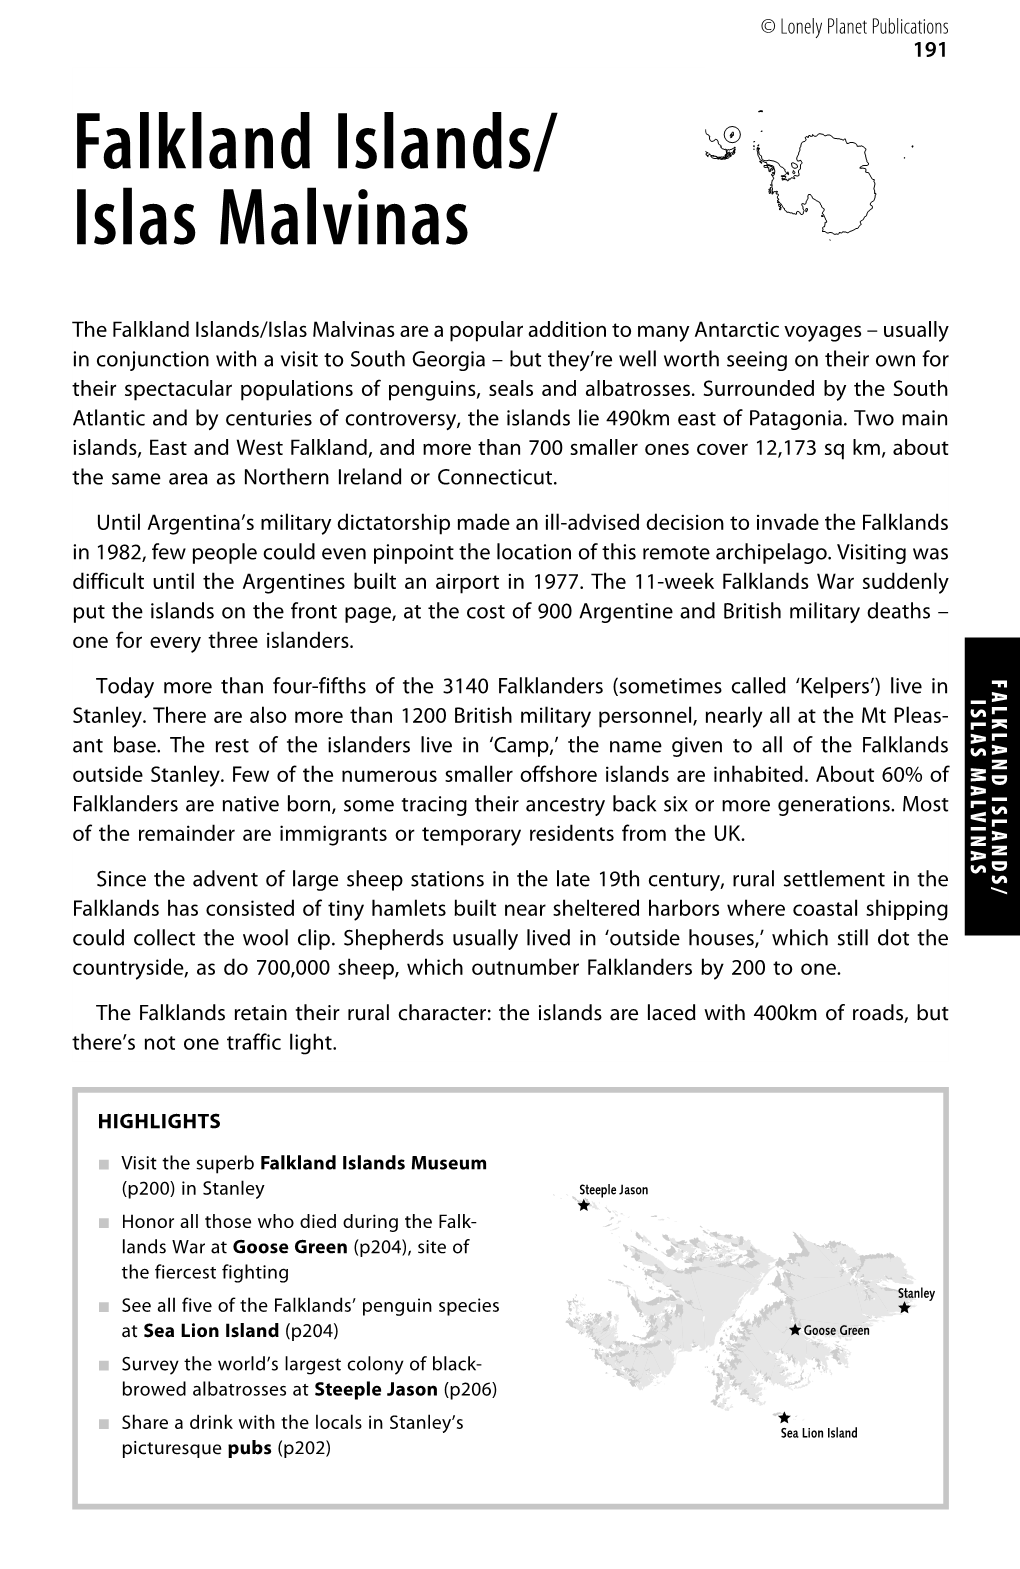 FALKLAND ISLANDS/ ISLAS MALVINAS Stanley 191 Goose Green Sea Lion Island © Lonely Planet Publications Planet Lonely © Steeple Jason